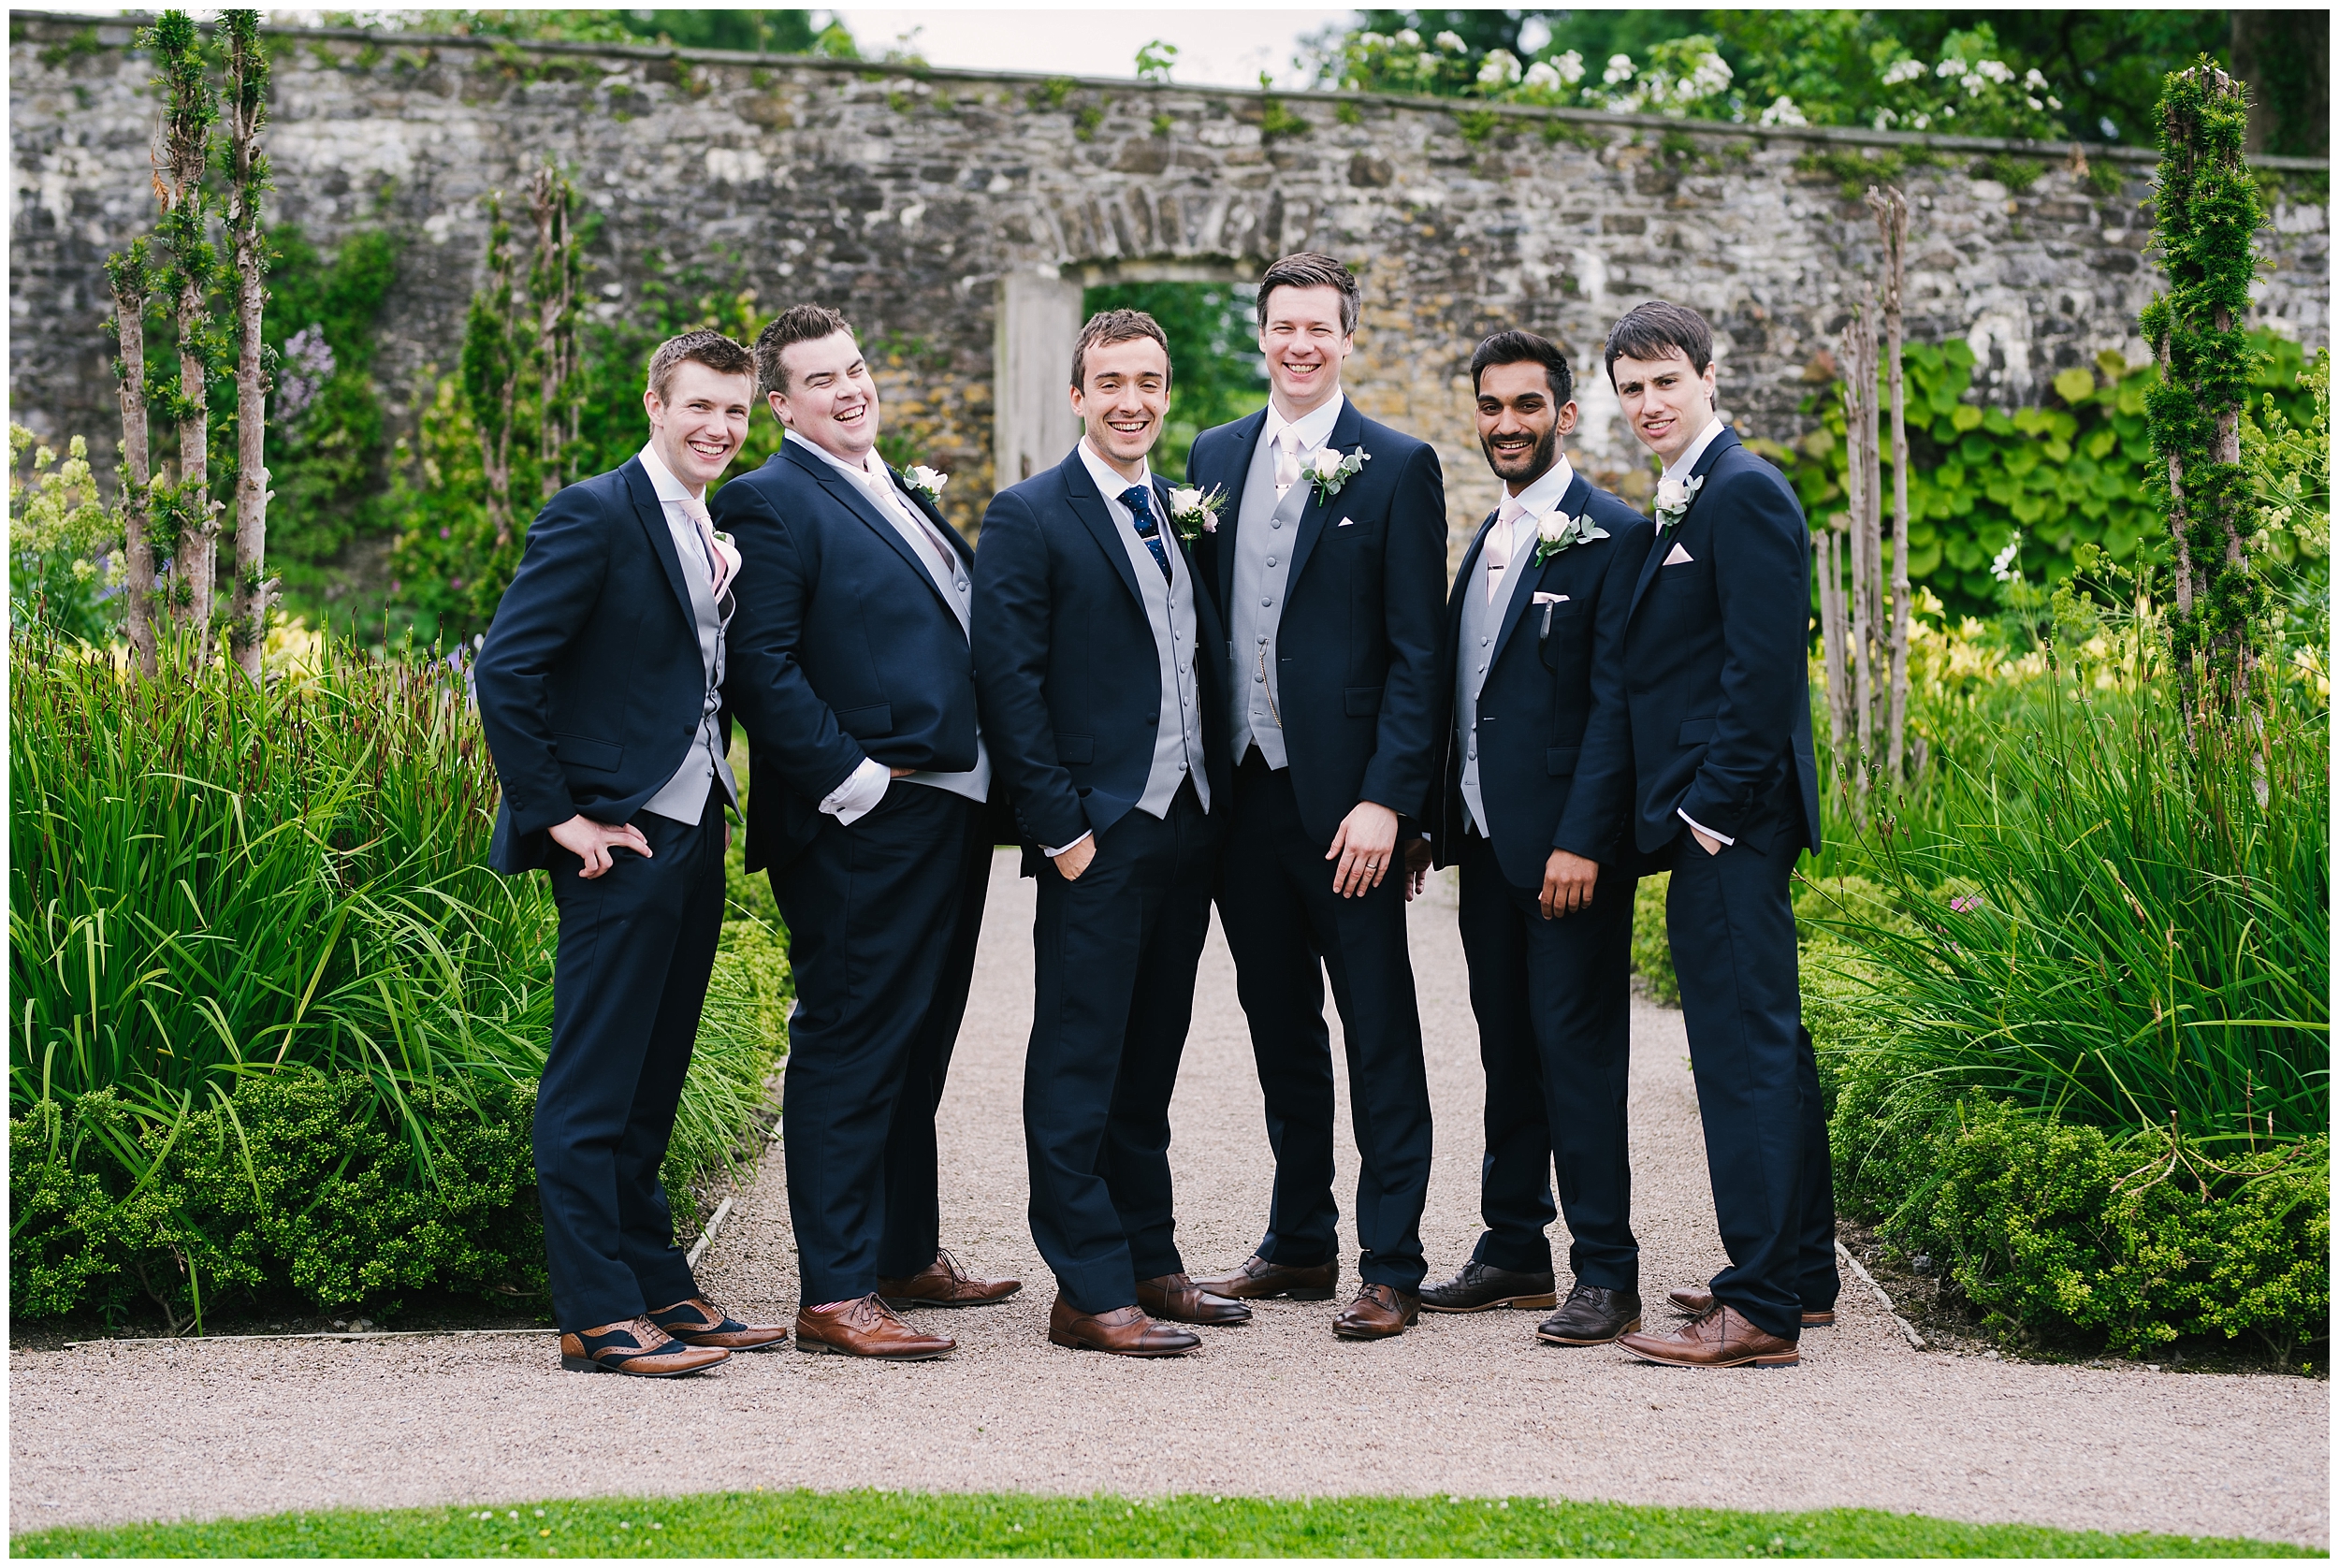 Groomsmen at Aberglasney Gardens Wedding in West Wales